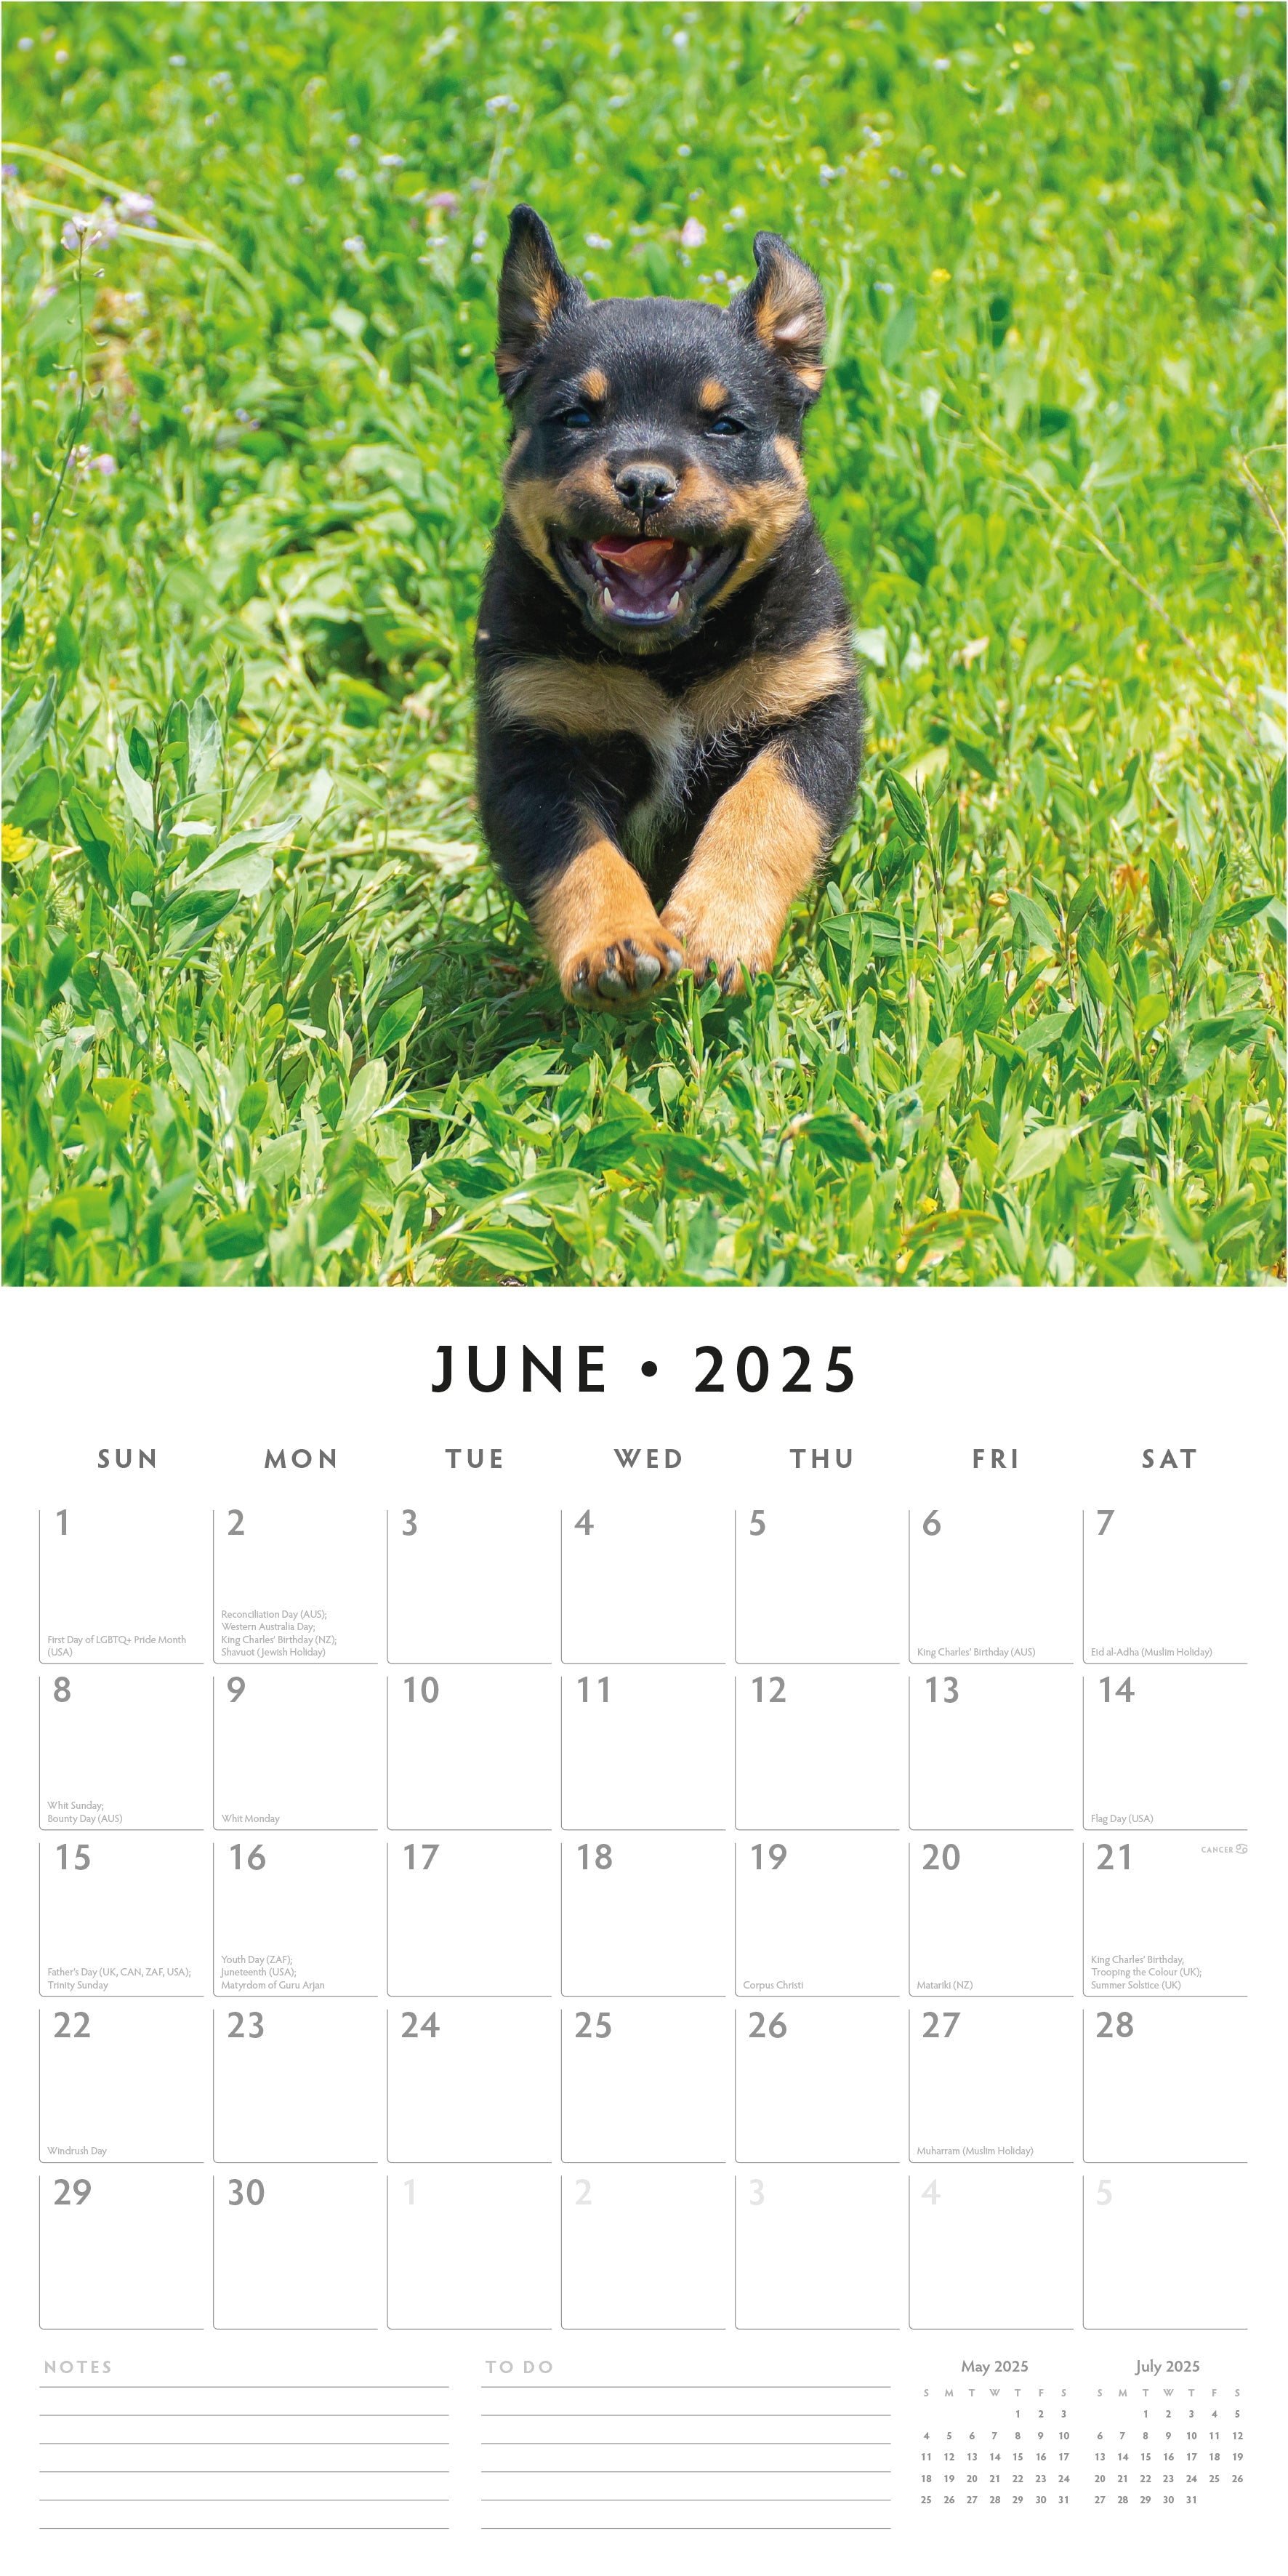 2025 Rottweiler Puppies - Square Wall Calendar